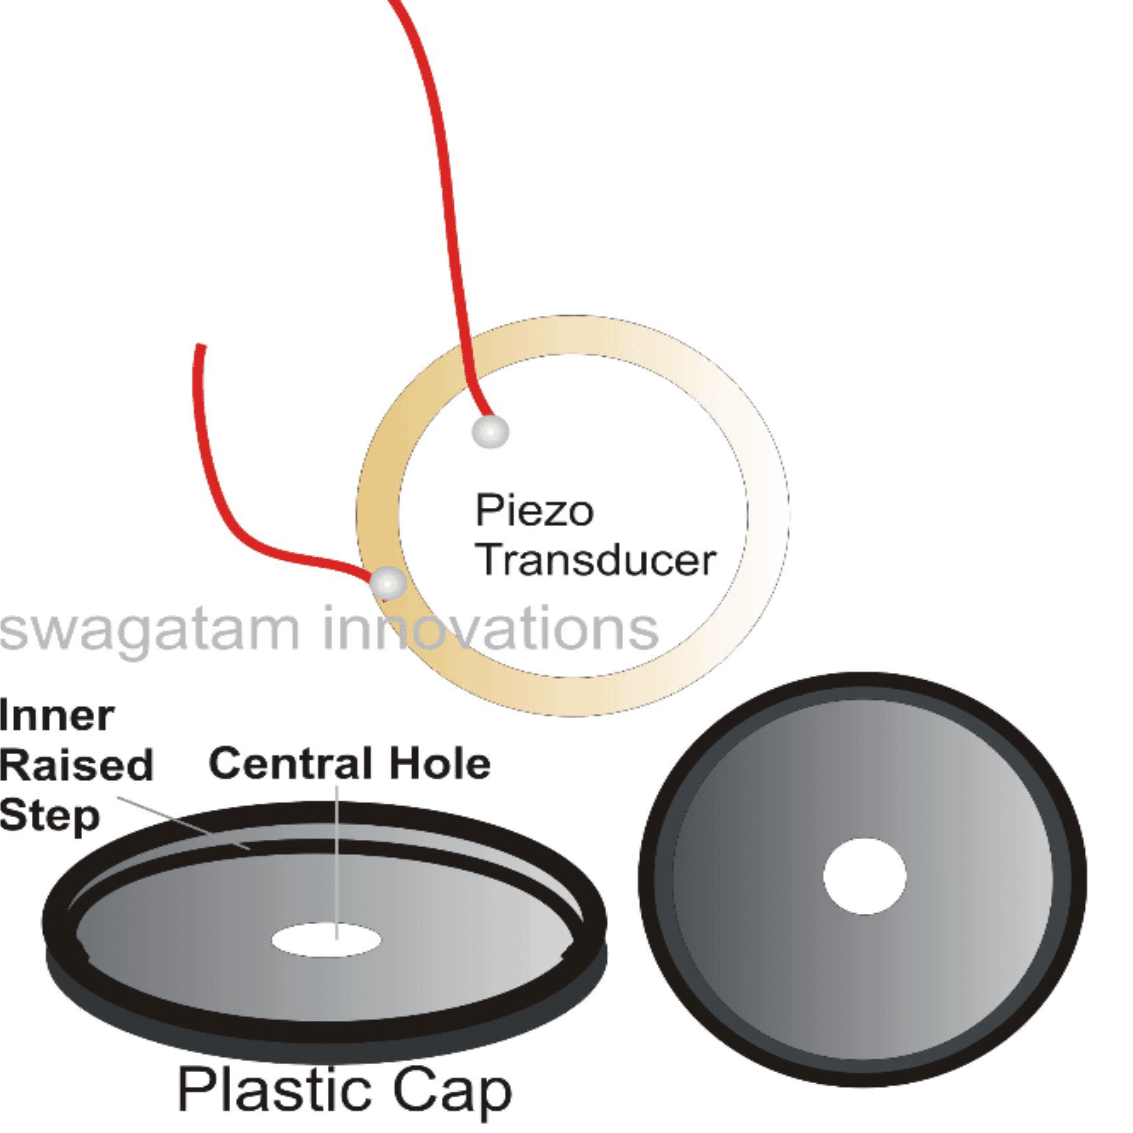 How to stick a piezo transducer on a base for maximum sound output